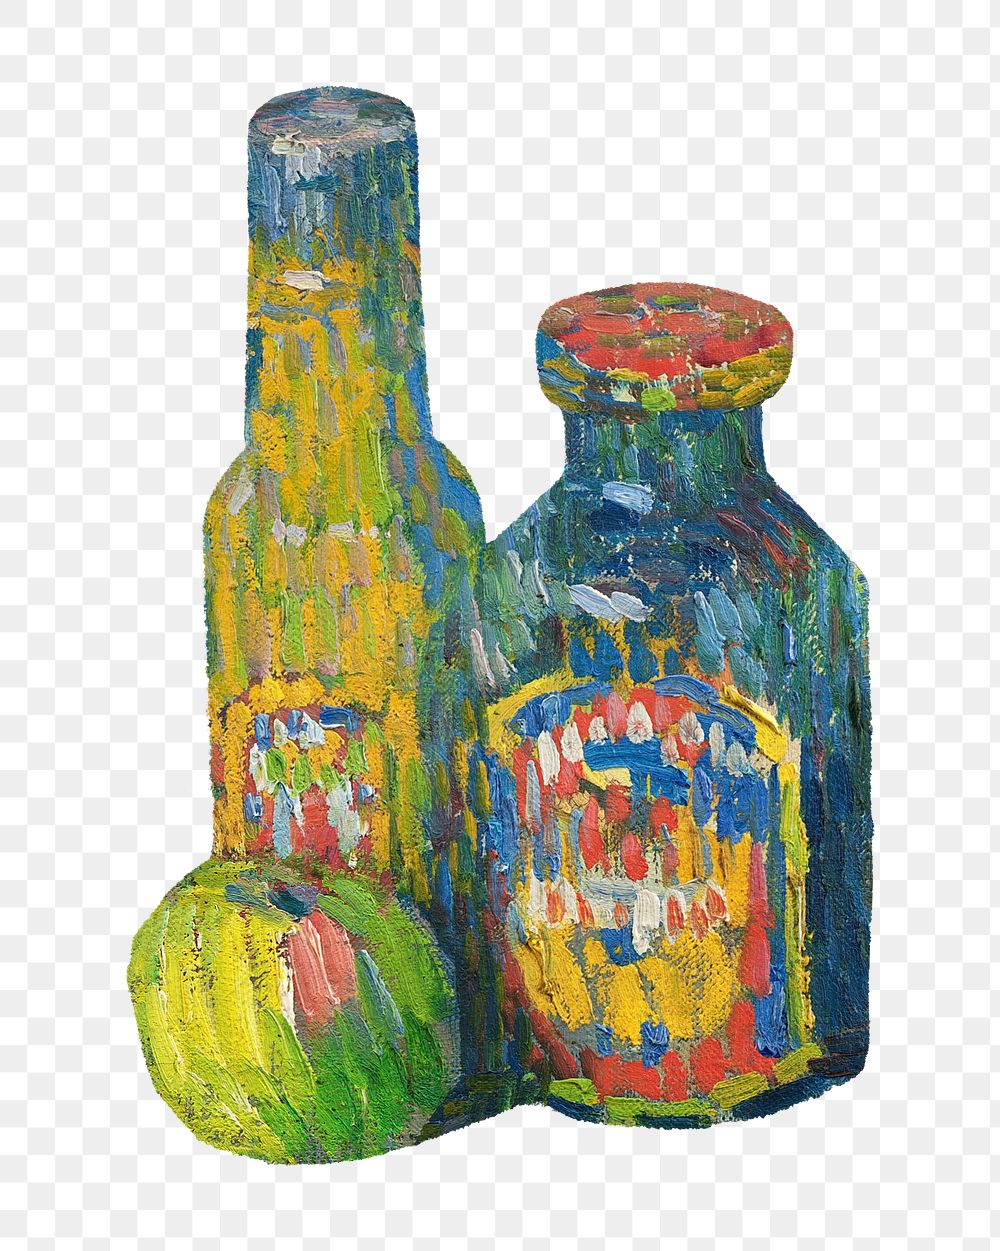 Bottles and Fruit png still life, vintage illustration by Alexej von Jawlensky., transparent background. Remixed by rawpixel.